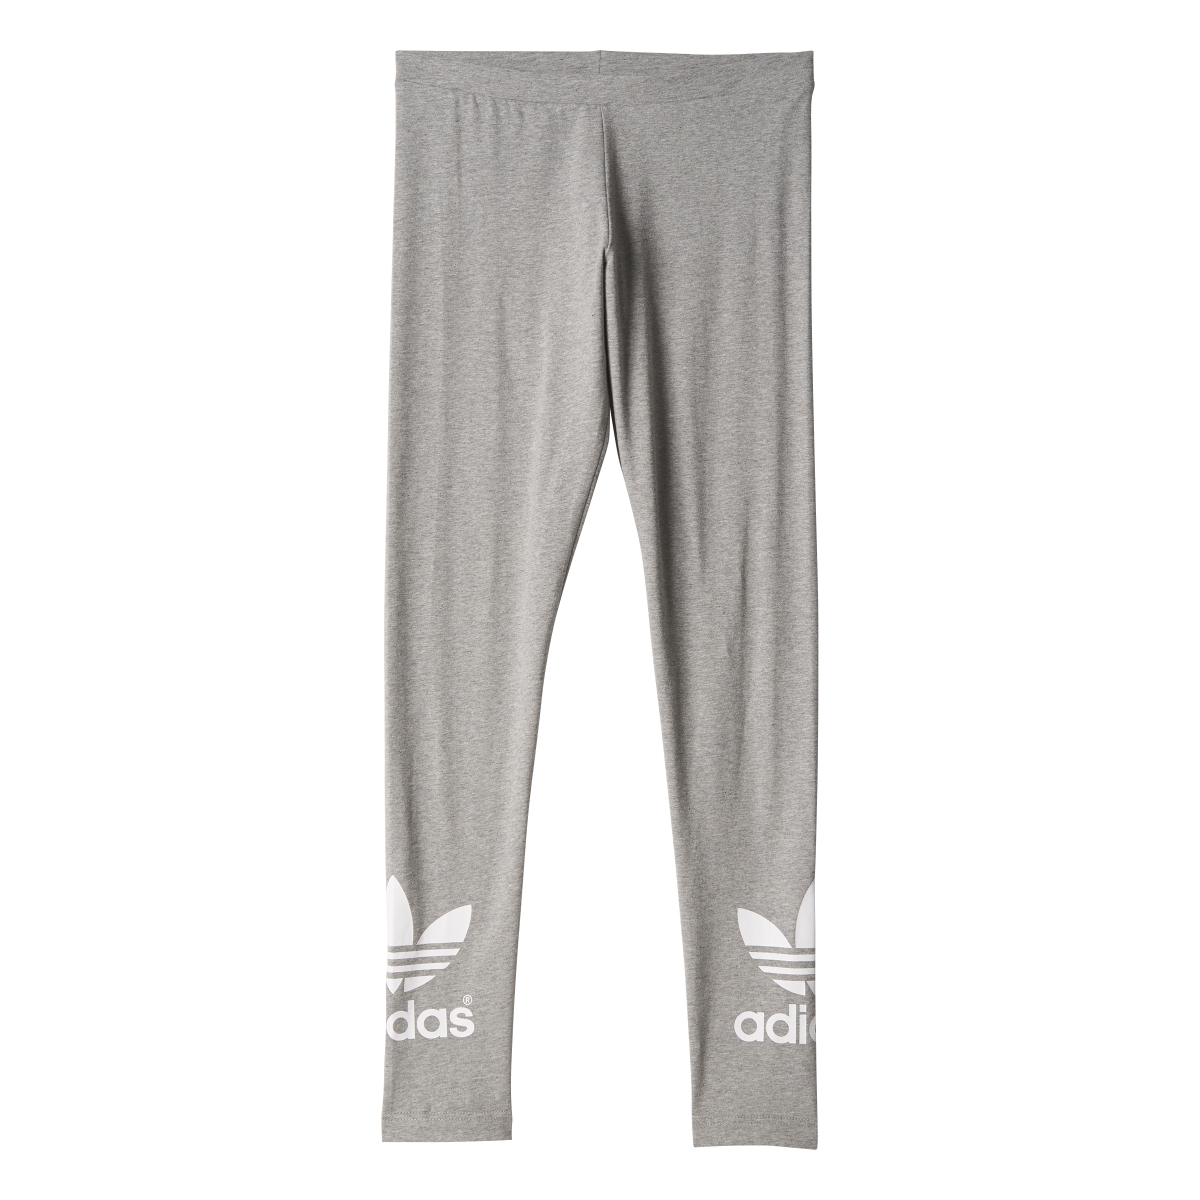 adidas originals ryv trefoil leggings in gray